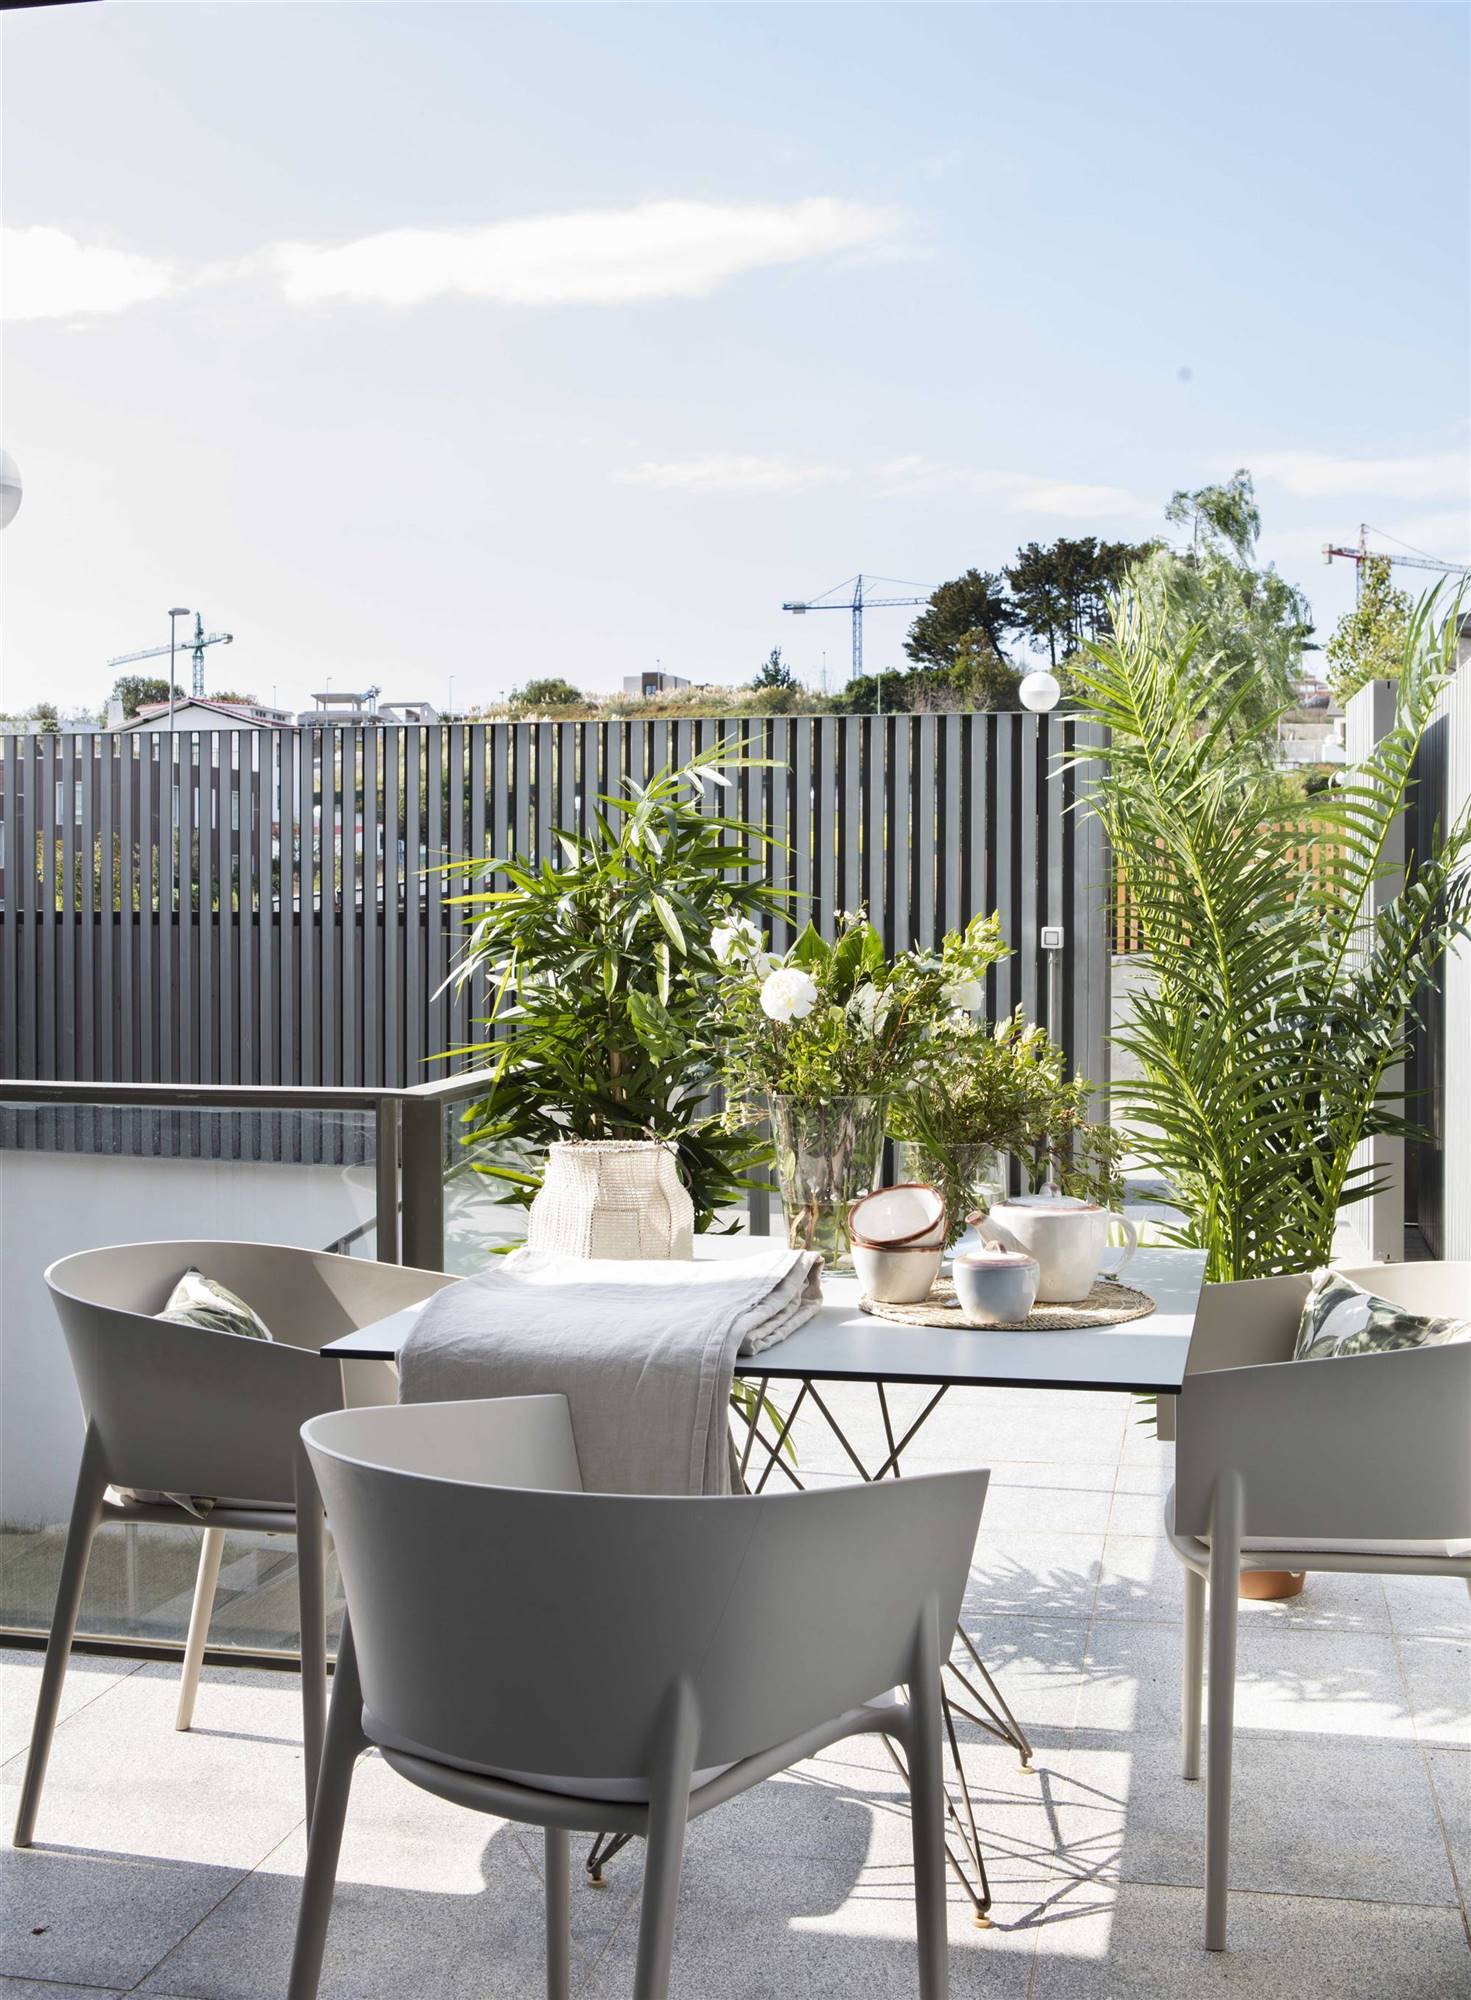 Terraza moderna con comedor exterior con sillas grises, mesa y plantas de exterior. 